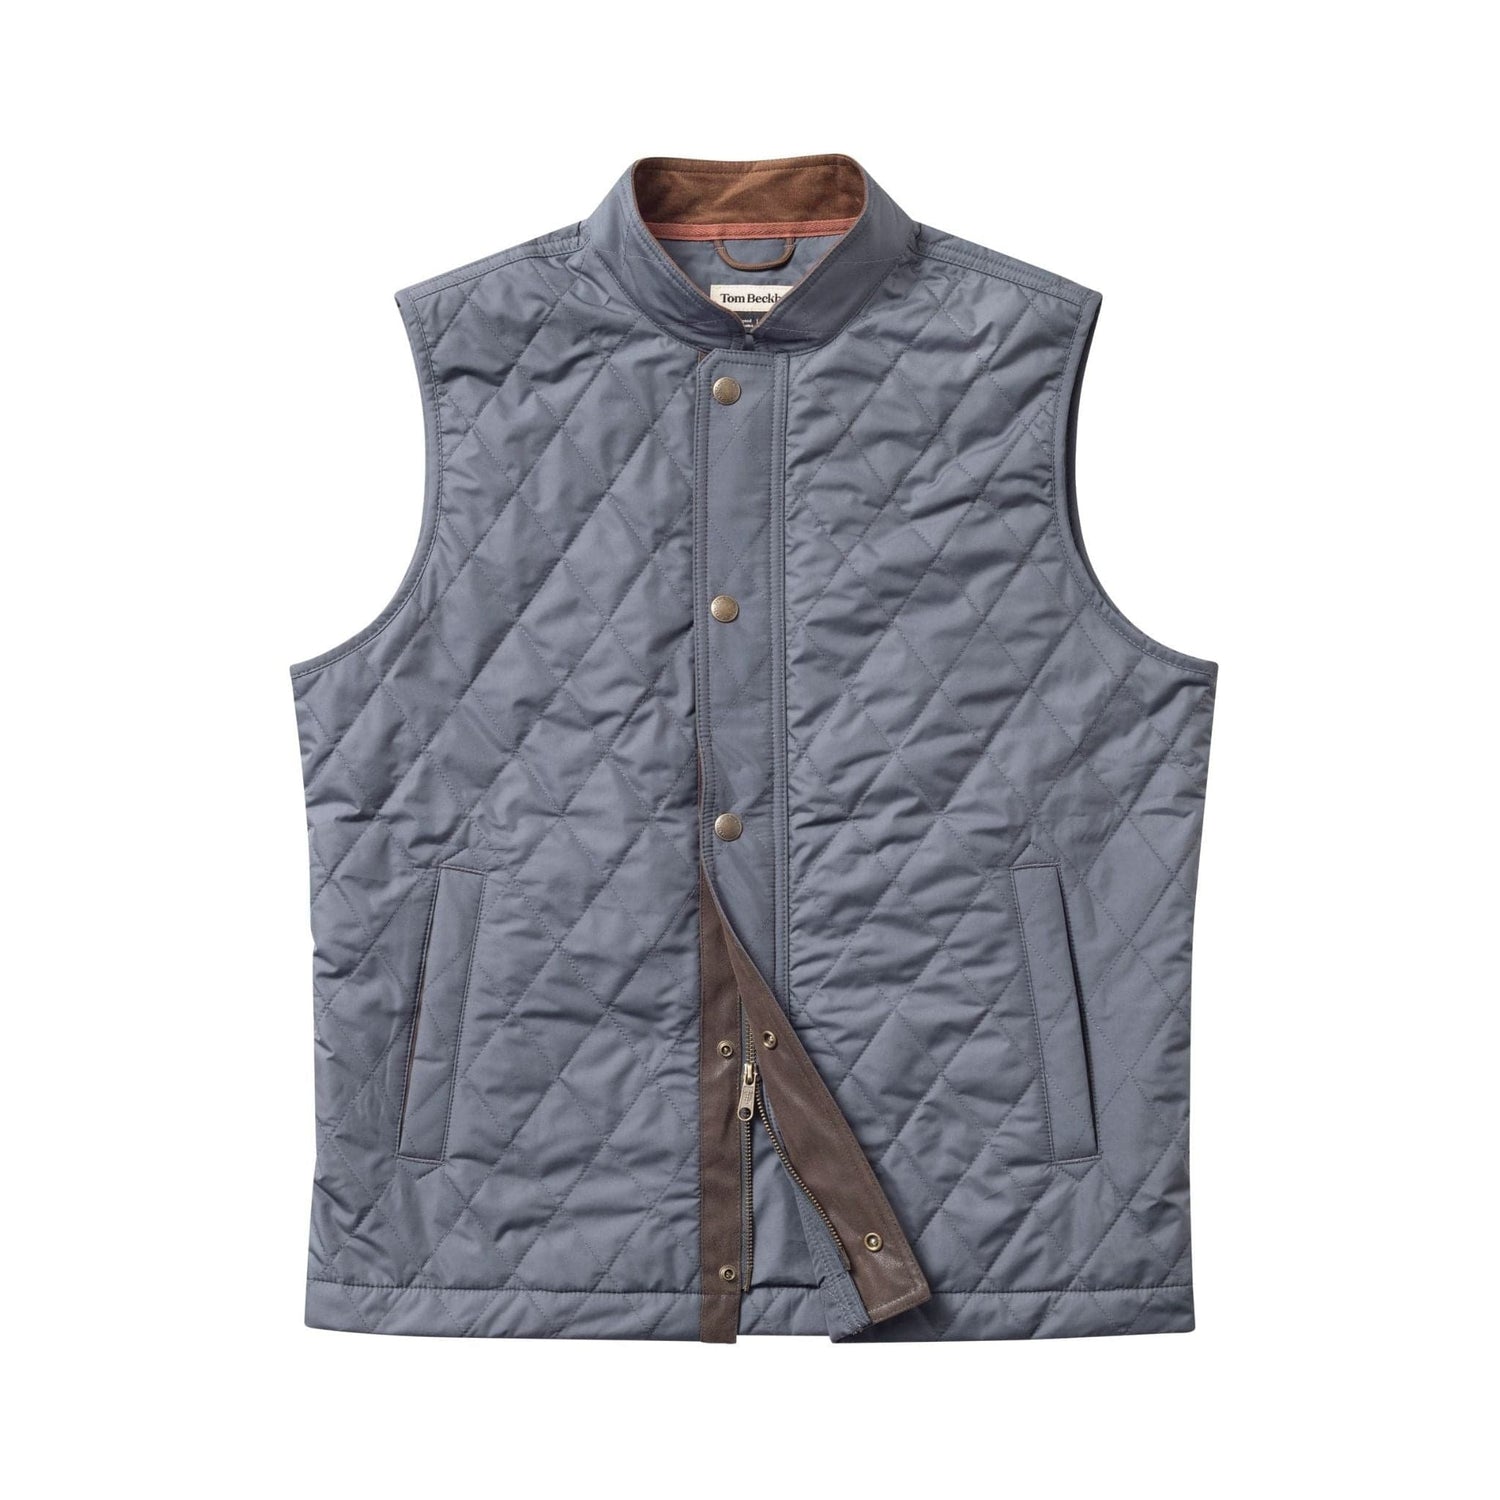 Buy Mens Black Color Gym Vest - 100% Cotton - Size S (Small) 70 to